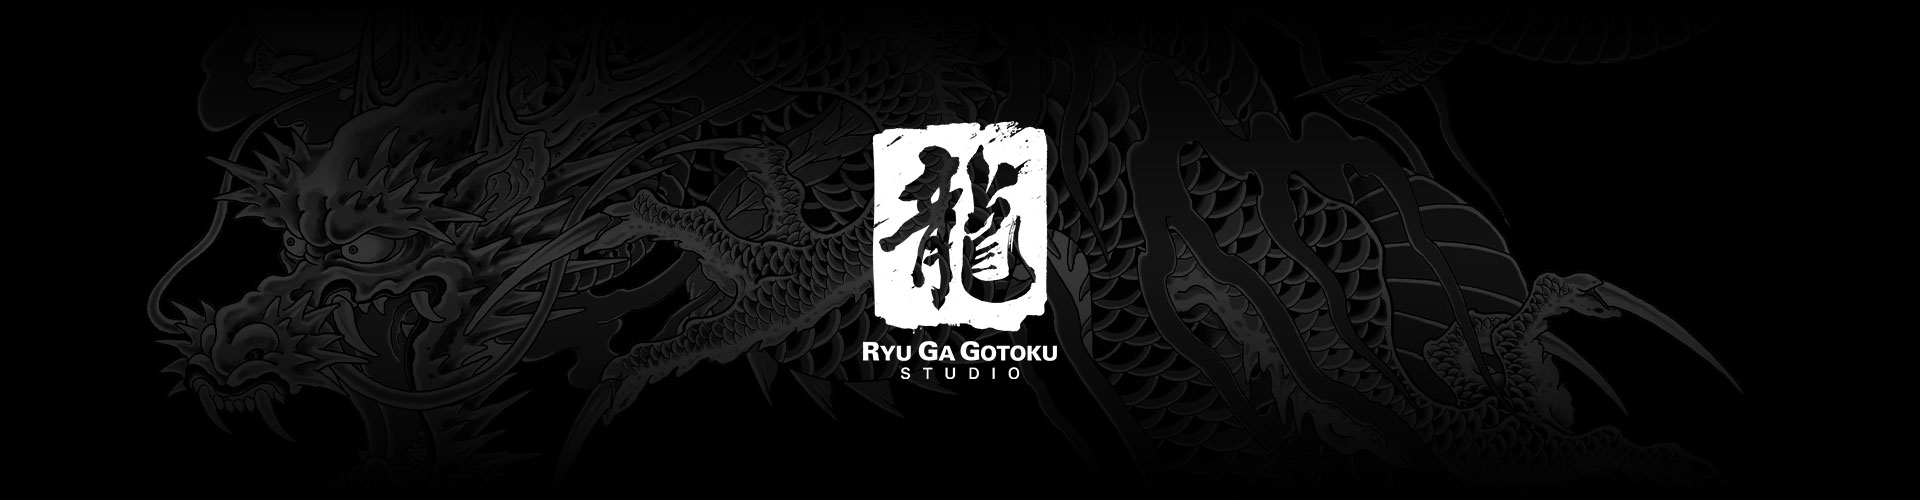 Ryu Ga Gotoku Studio 標誌與灰龍刺青圖案背景。